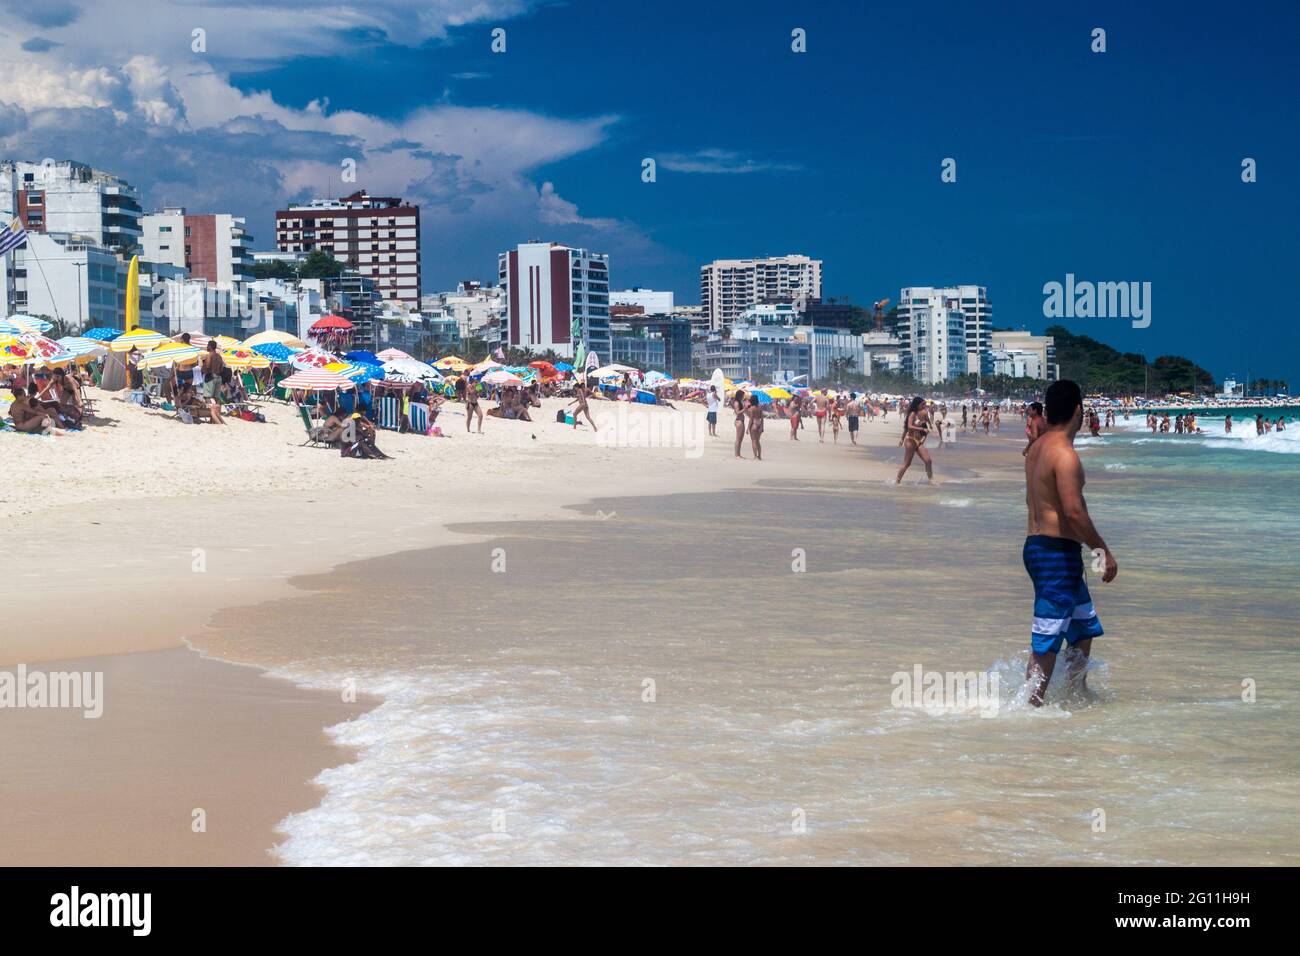 RIO DE JANEIRO, BRAZIL - JANUARY 27, 2015: People enjoy the famous beach Ipanema in Rio de Janeiro. Stock Photo